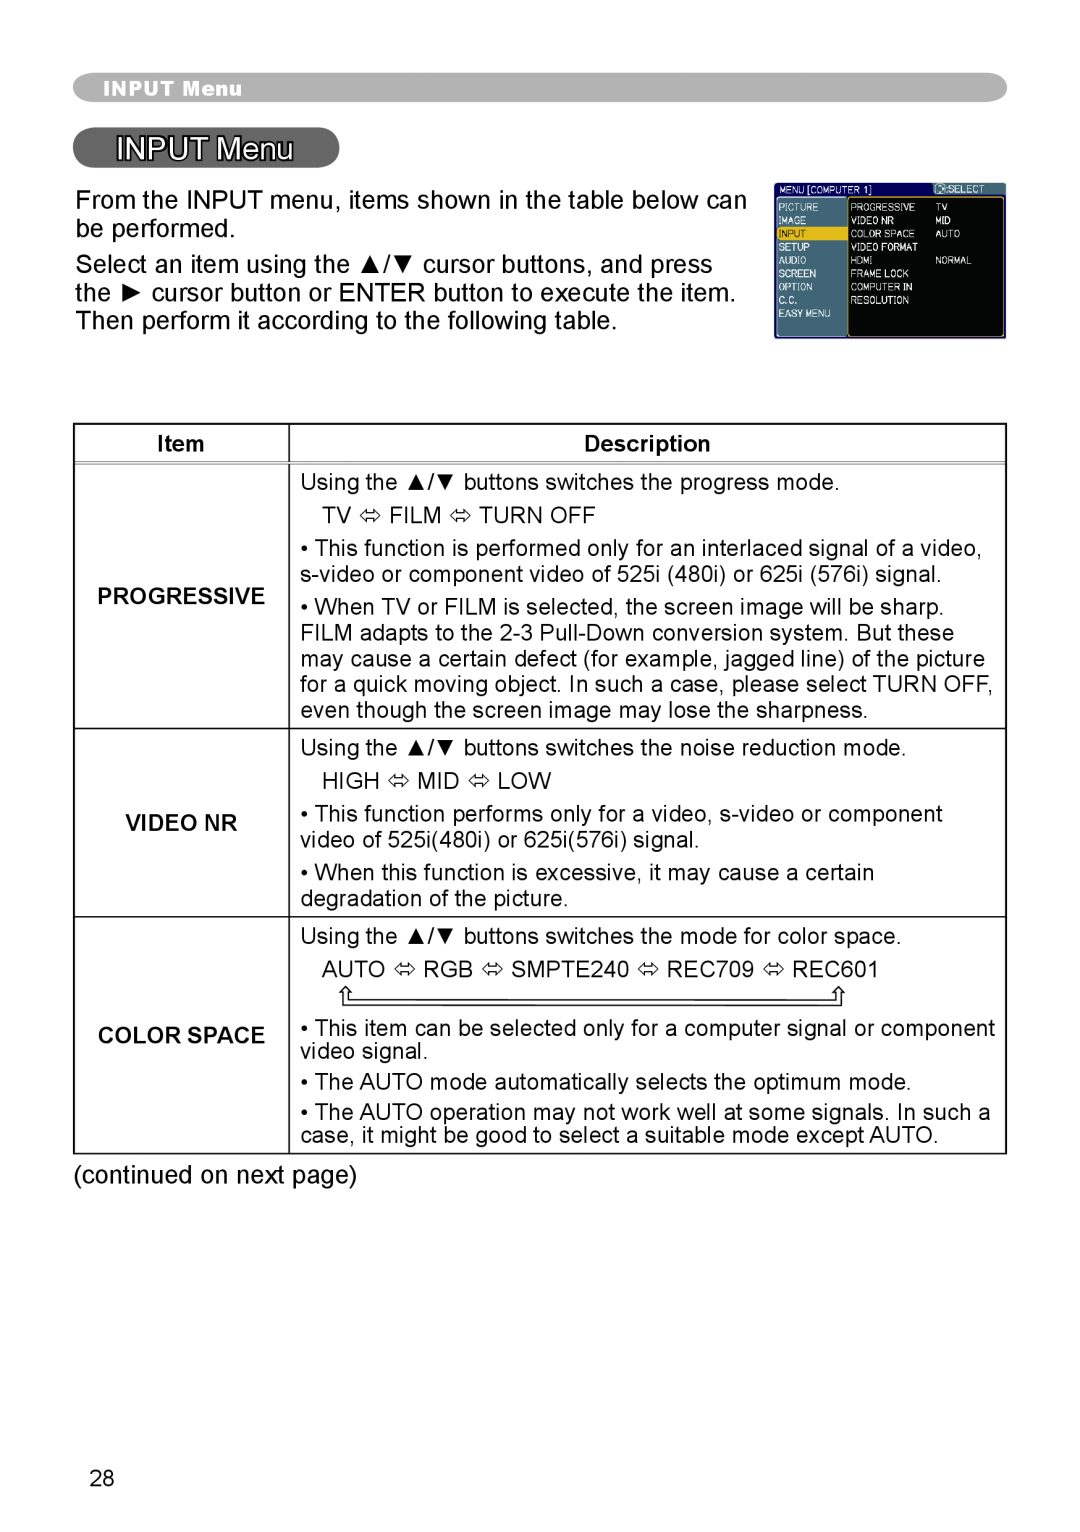 Dukane 8783 user manual INPUT Menu, Description, Progressive, Video Nr, Color Space 